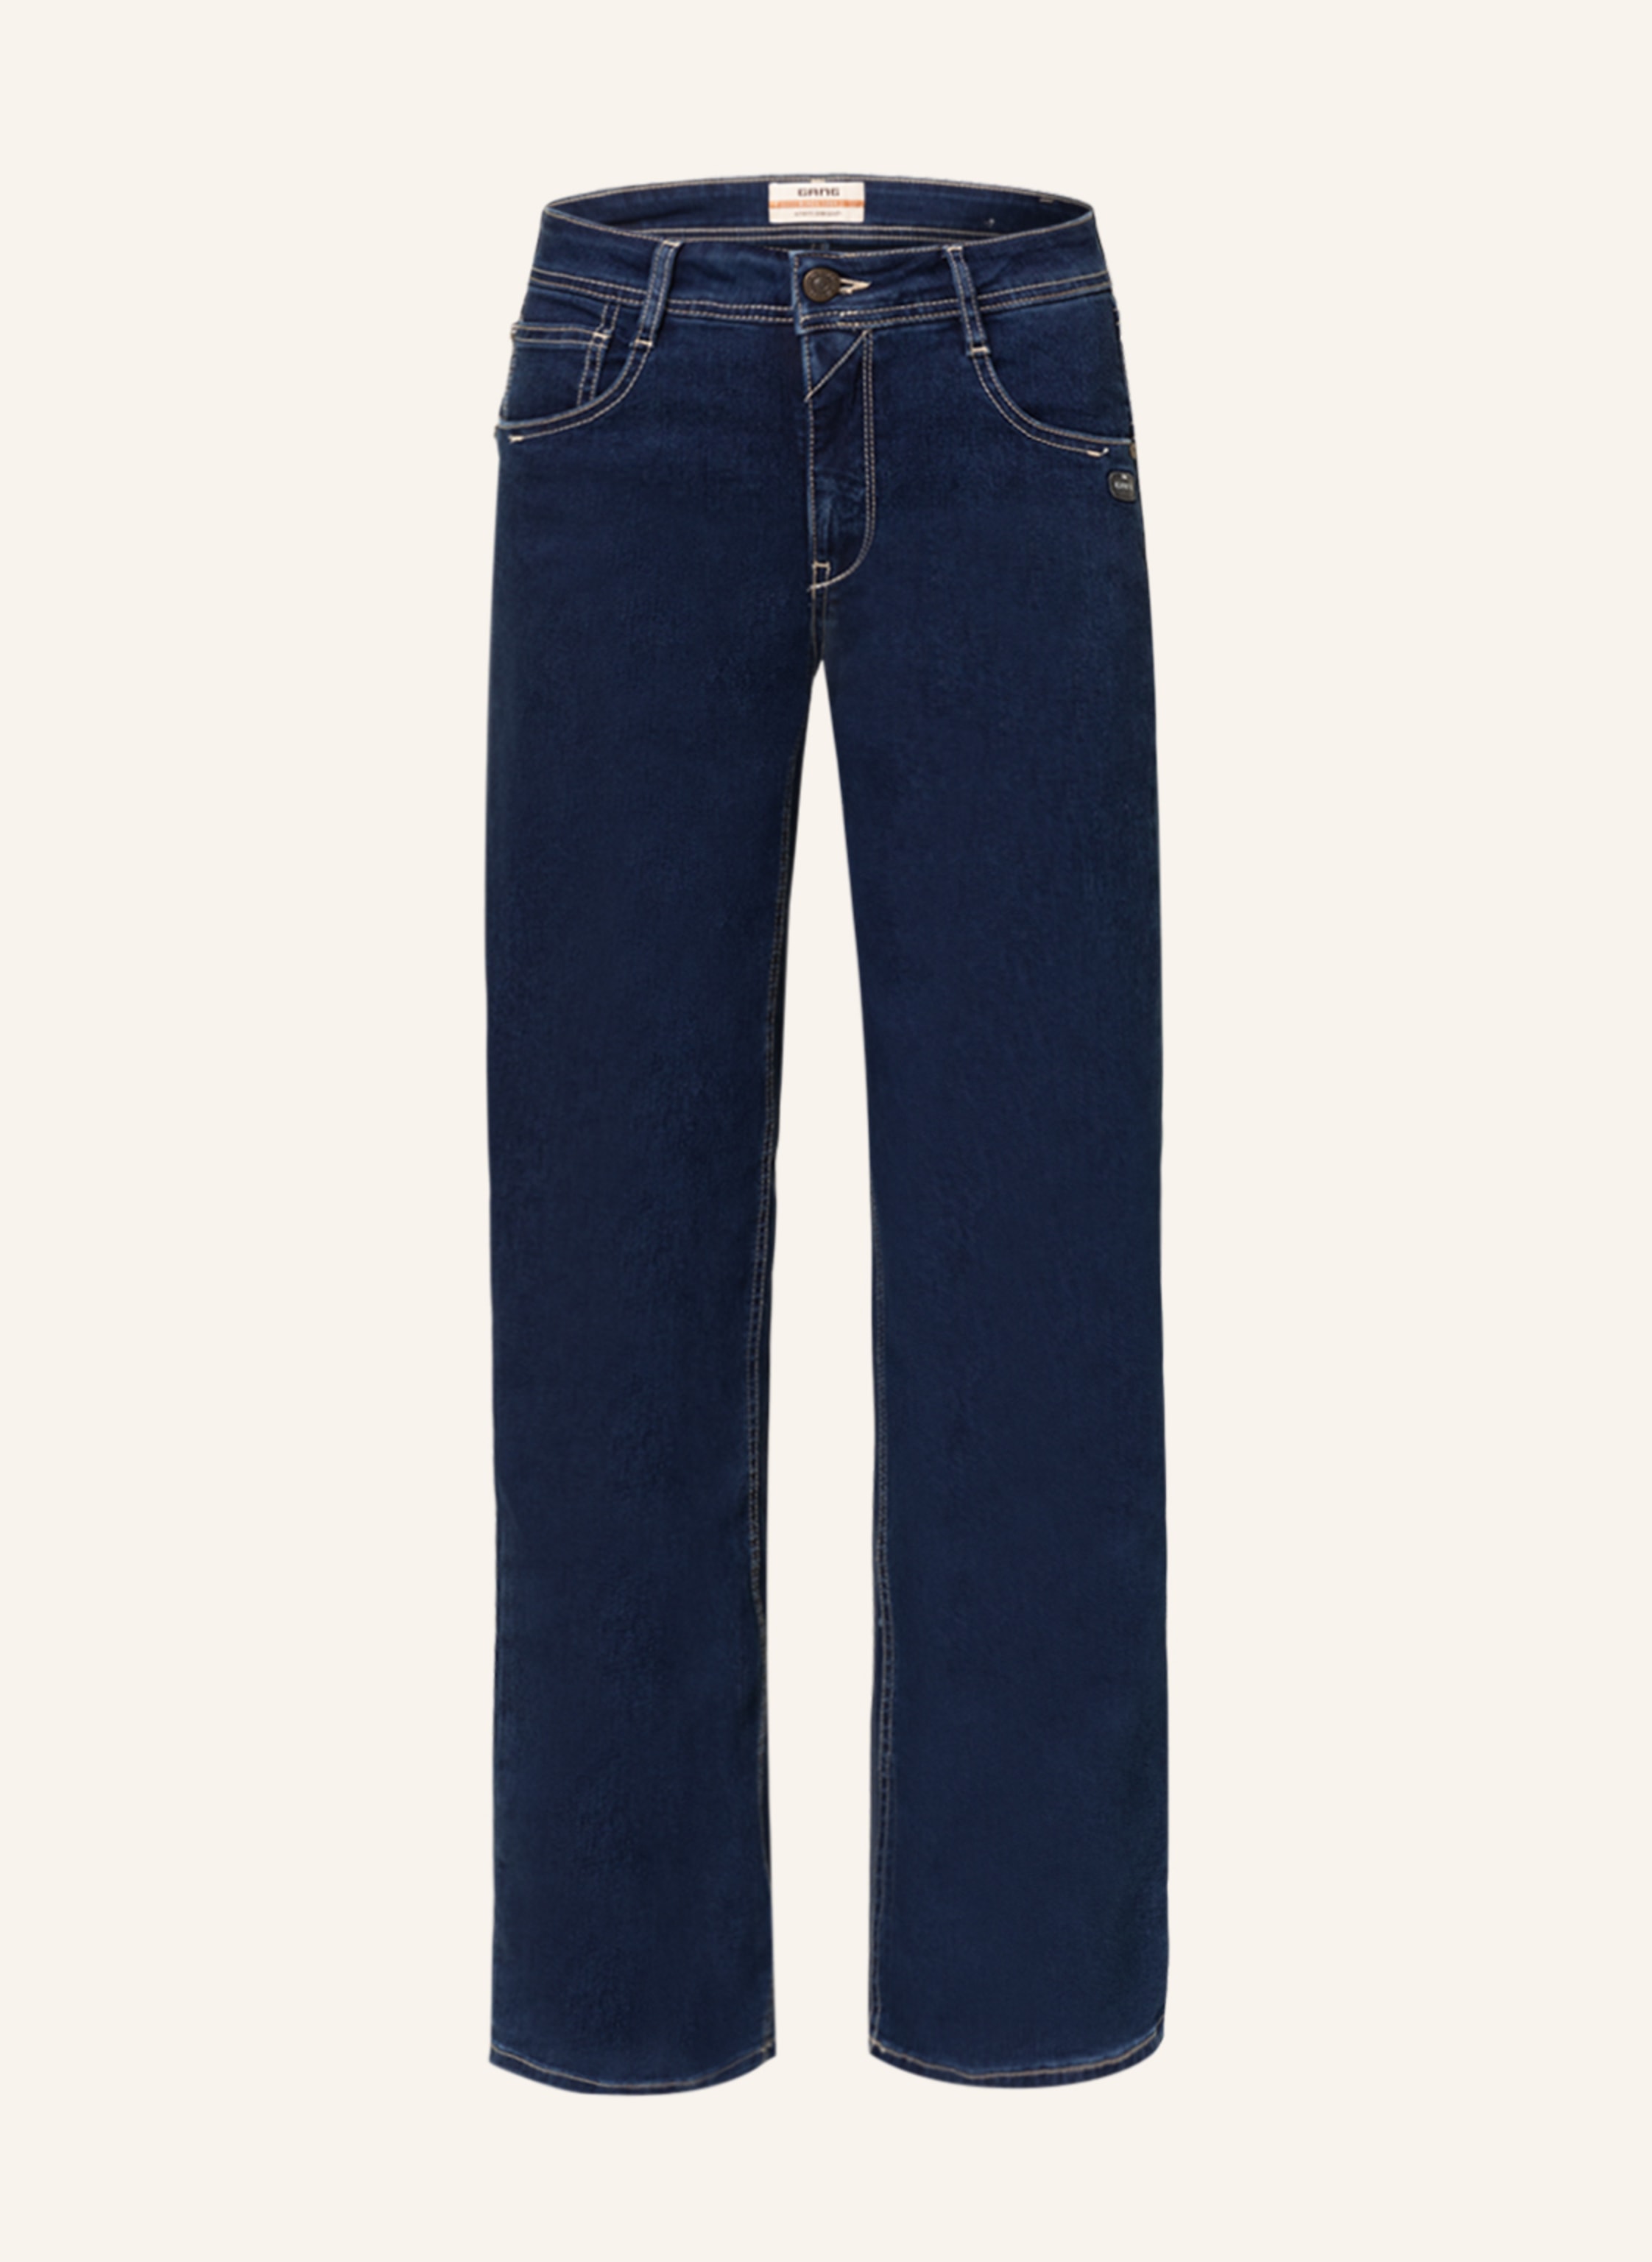 GANG Jeans AMELIE in 2274 dark raw - Buy Online! | Breuninger